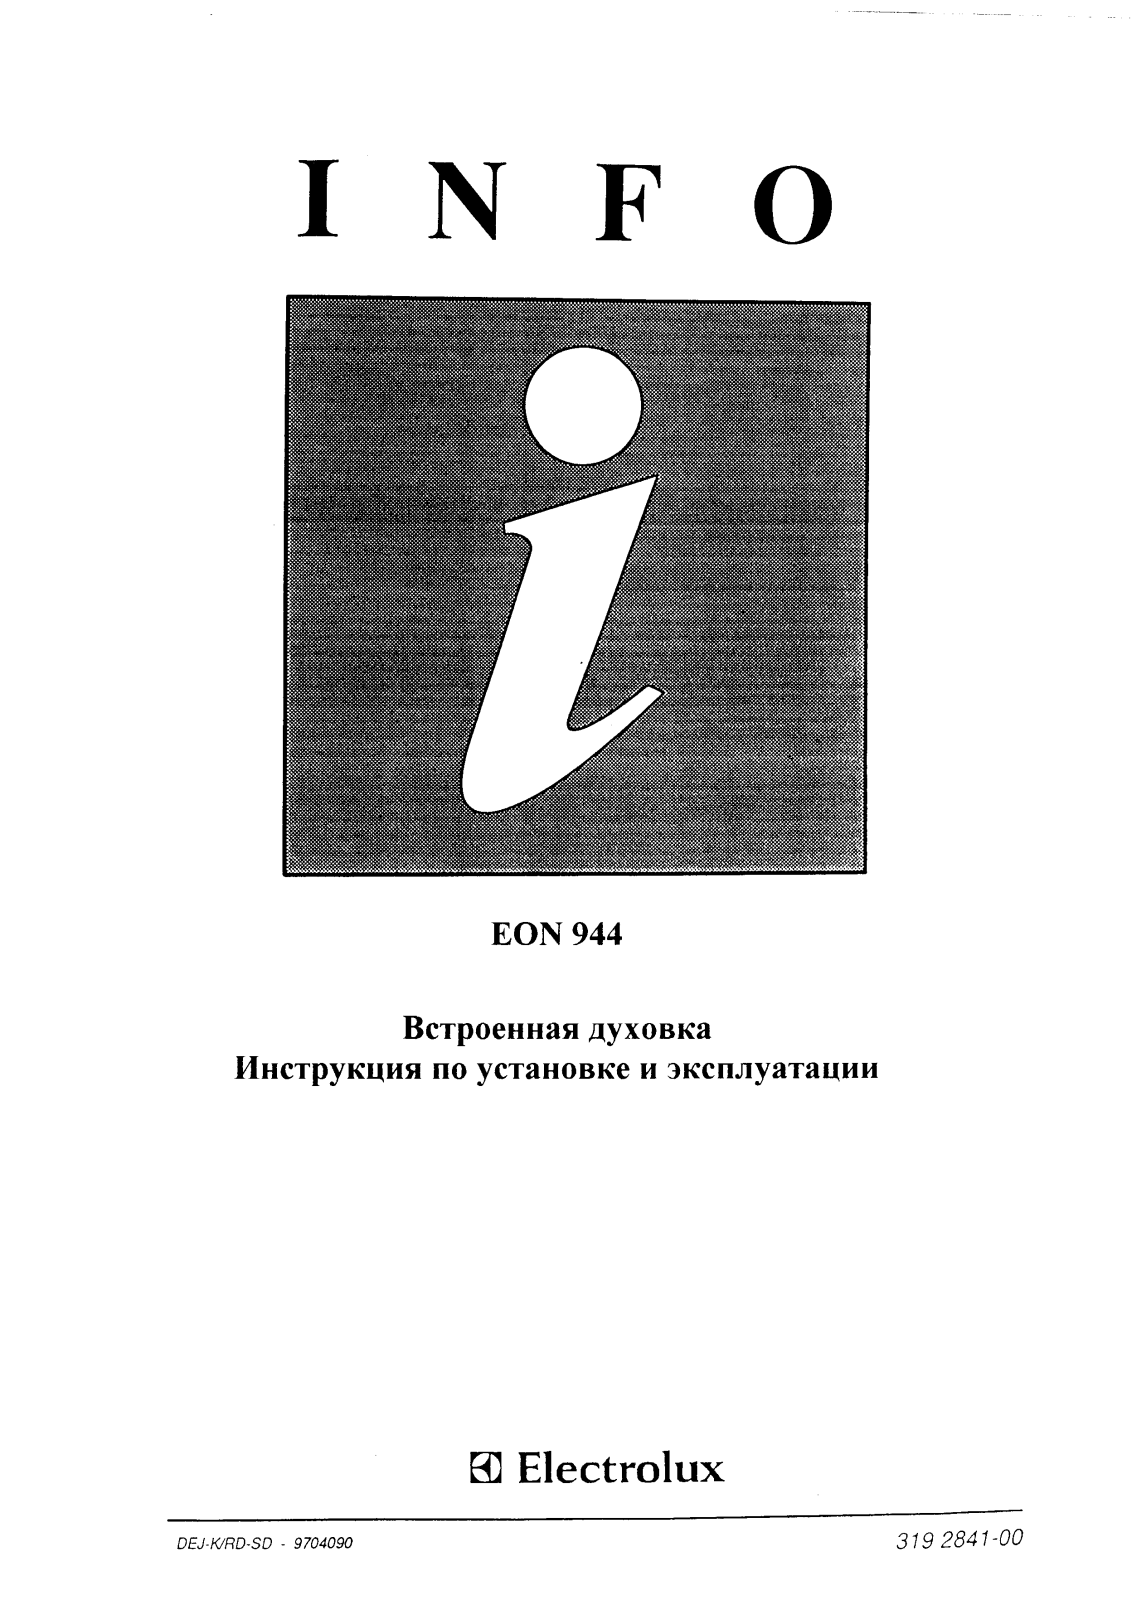 ELECTROLUX EON944 User Manual